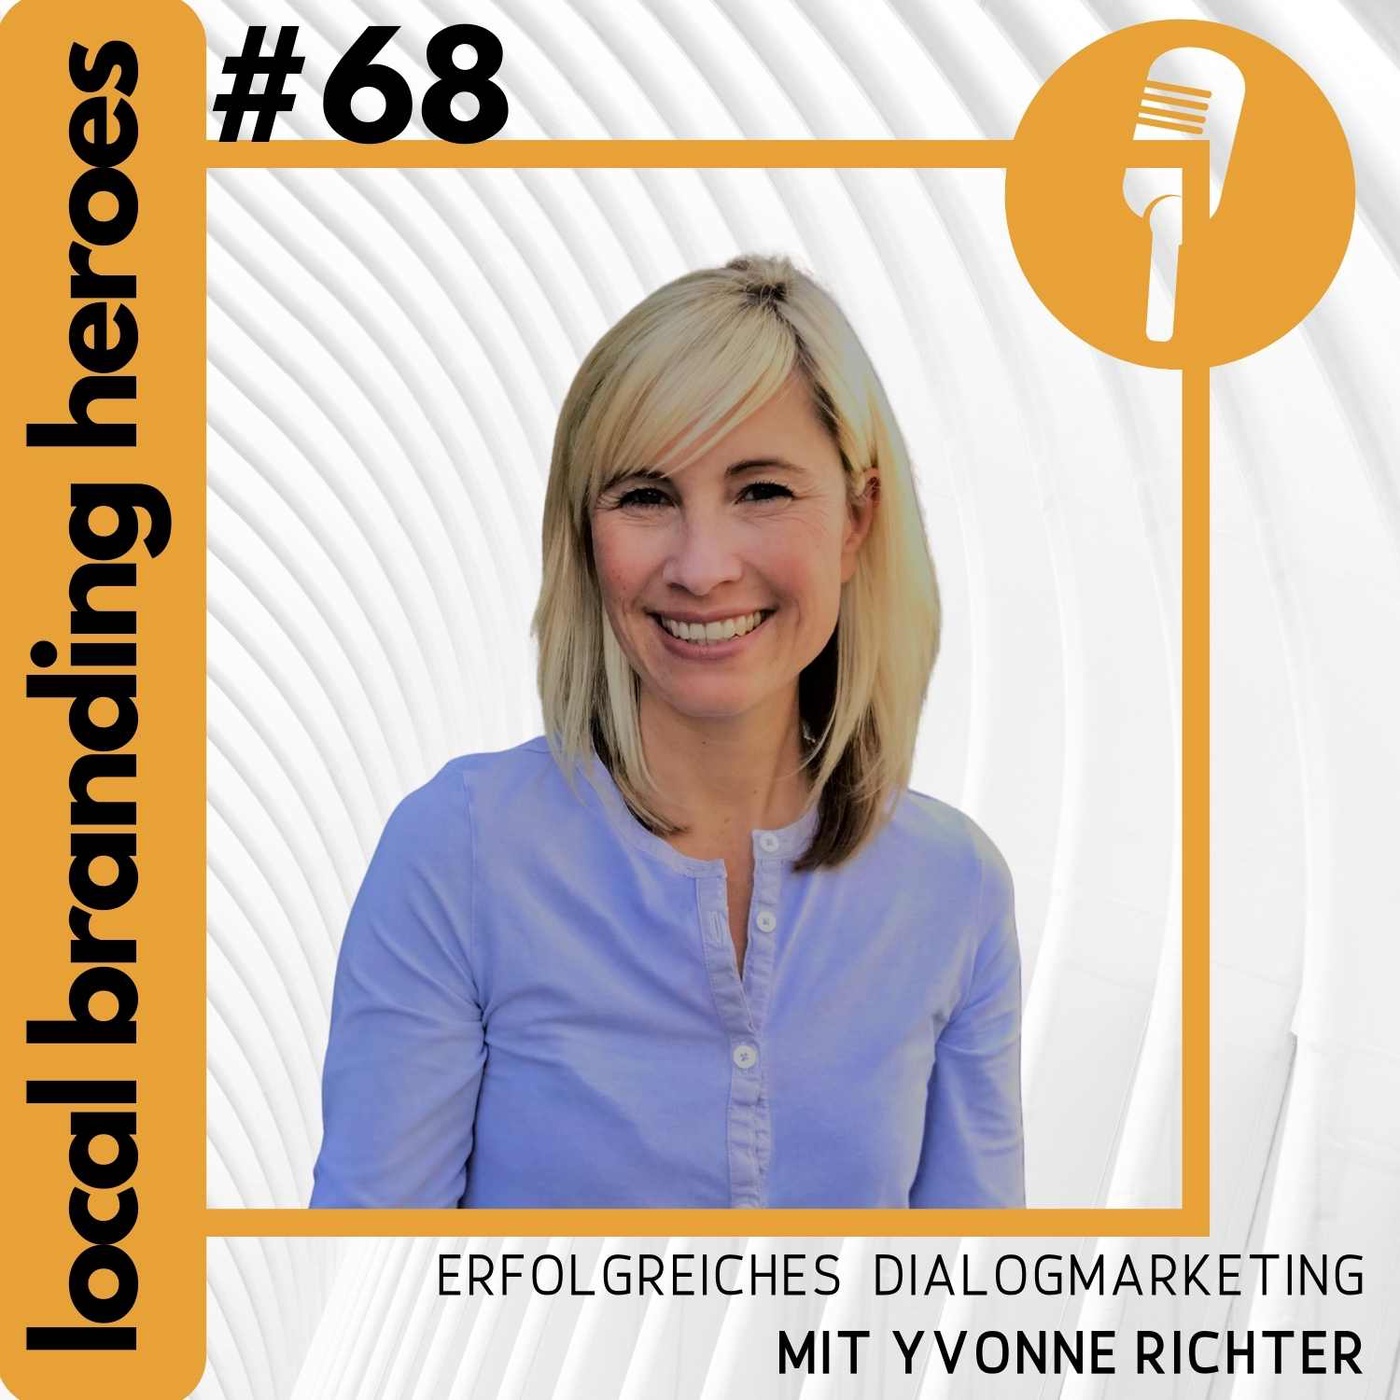 #68 Yvonne Richter, Vice President Success Management Print & Vice President Spezialisten Dialogmarketing, Deutsche Post